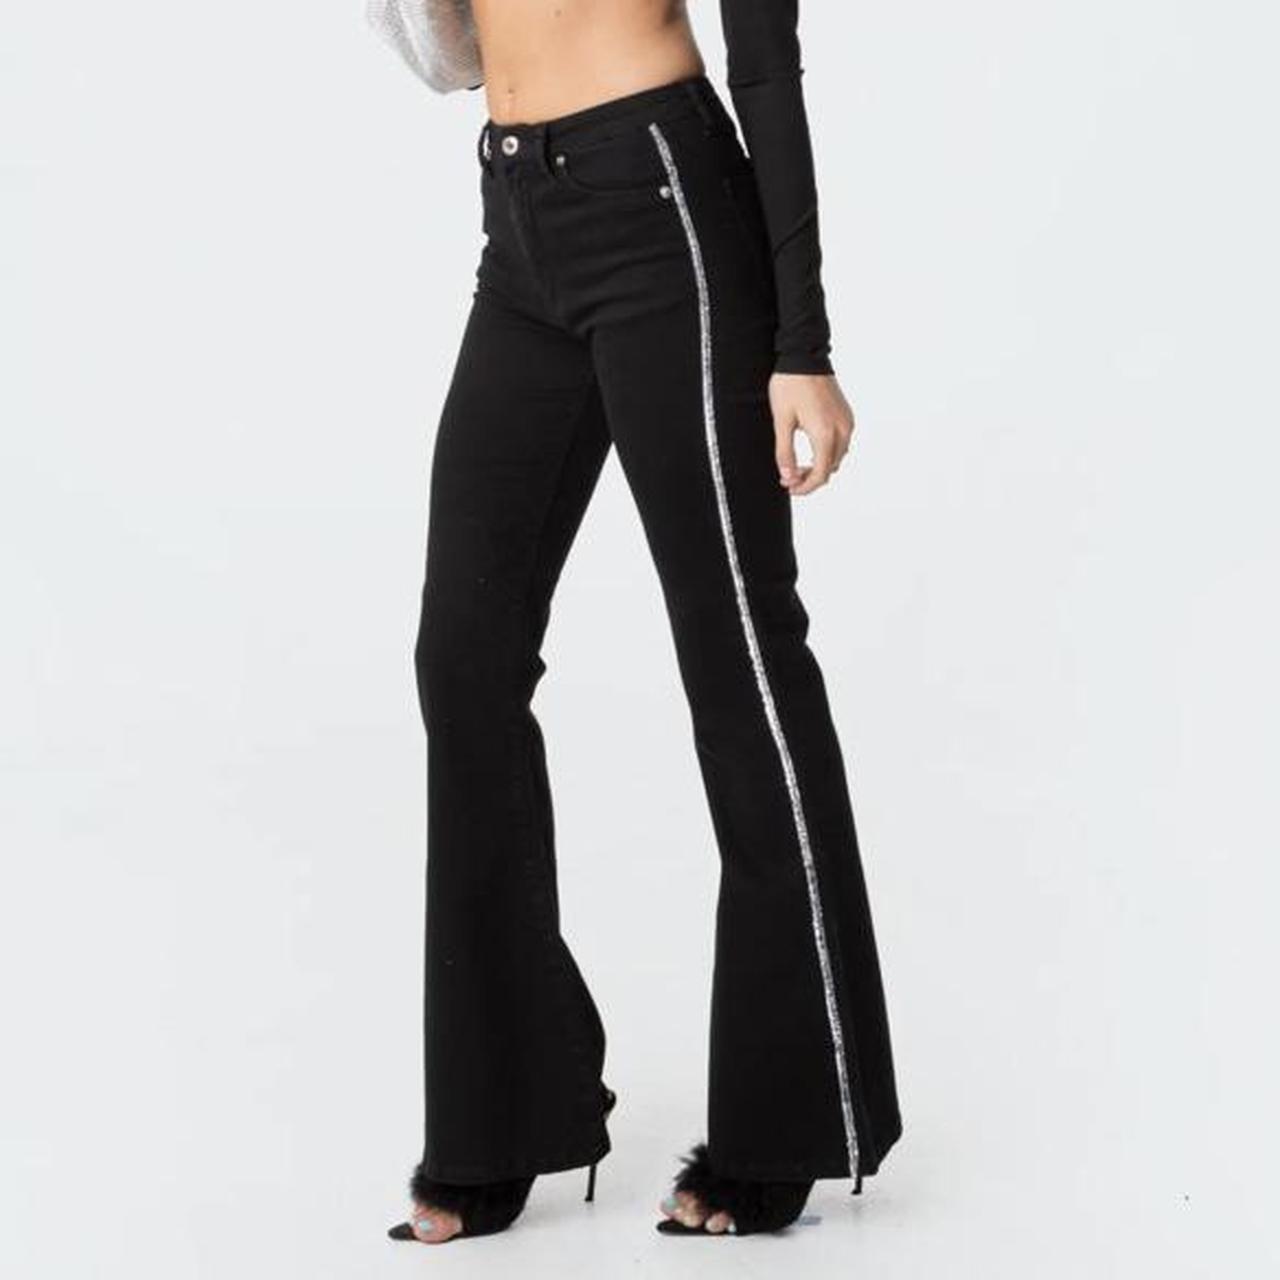 Edikted Silver Stripe Flare Jeans - Black